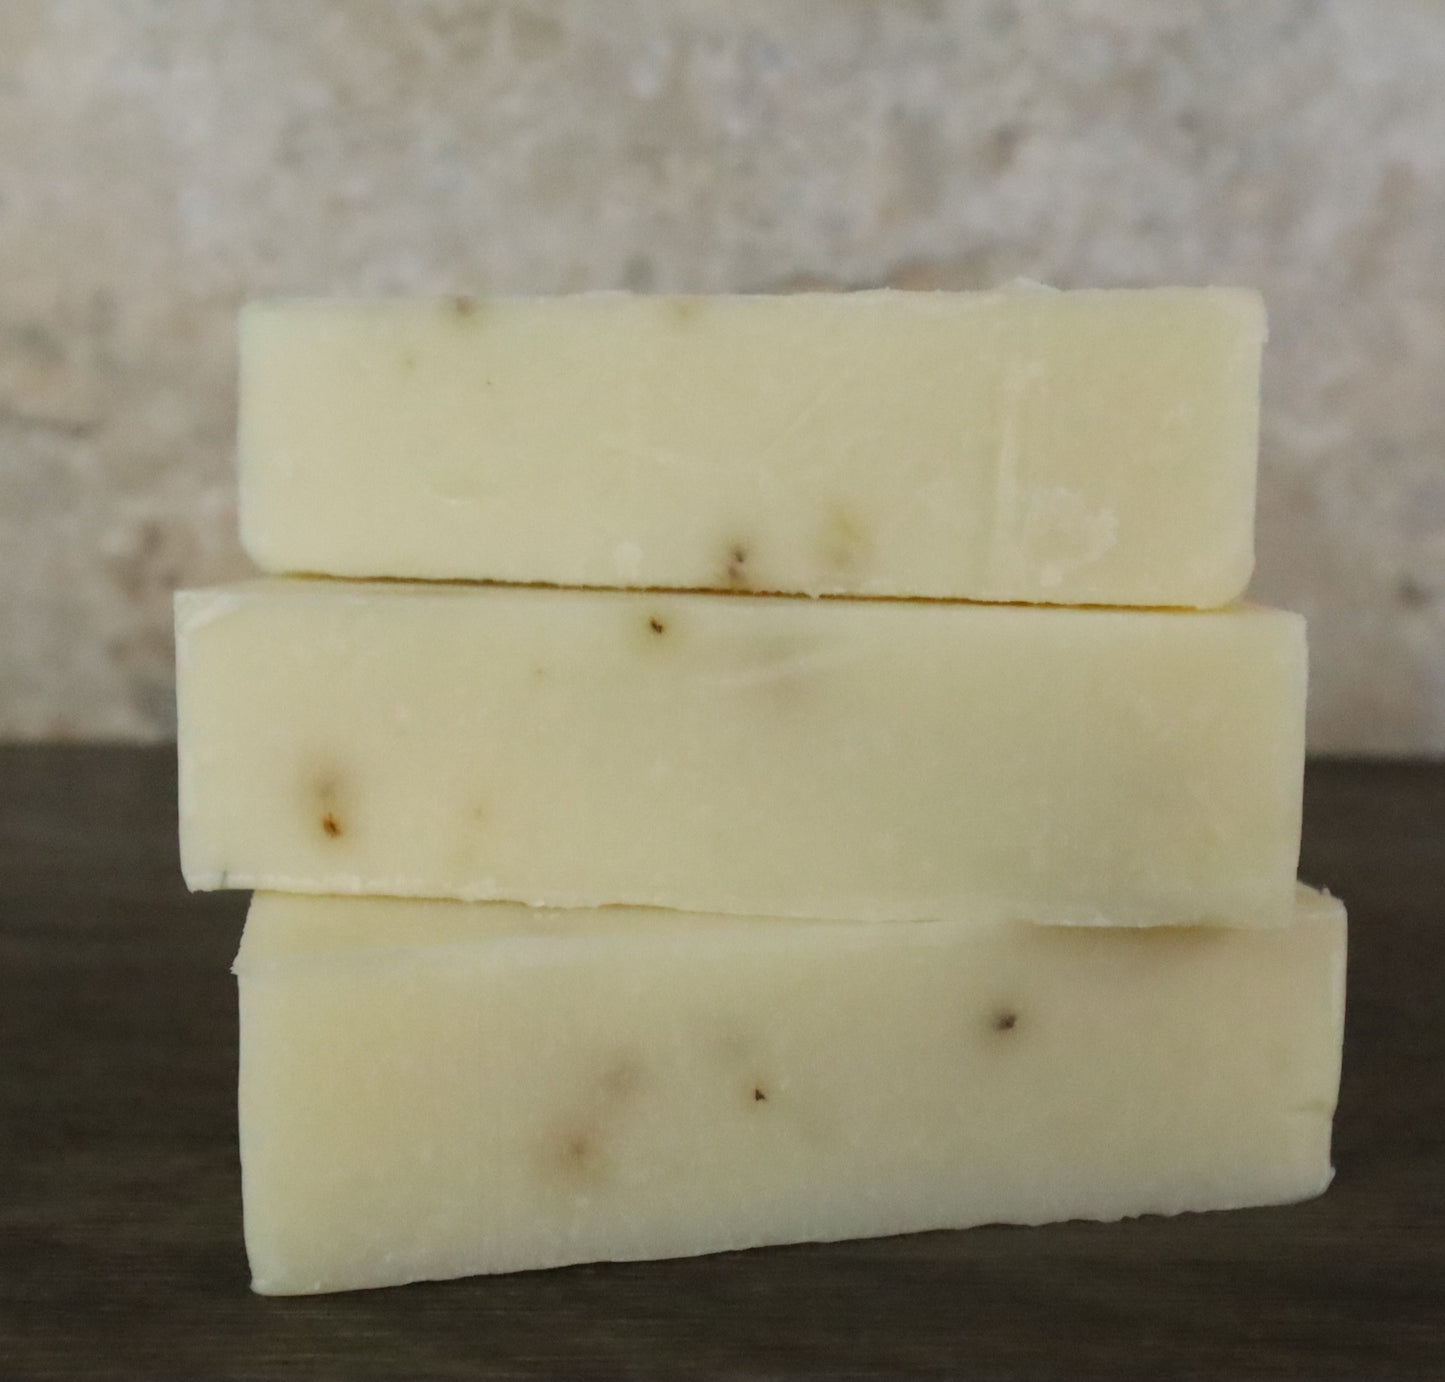 Ca'Mora eucalyptus aloe shea butter soap.